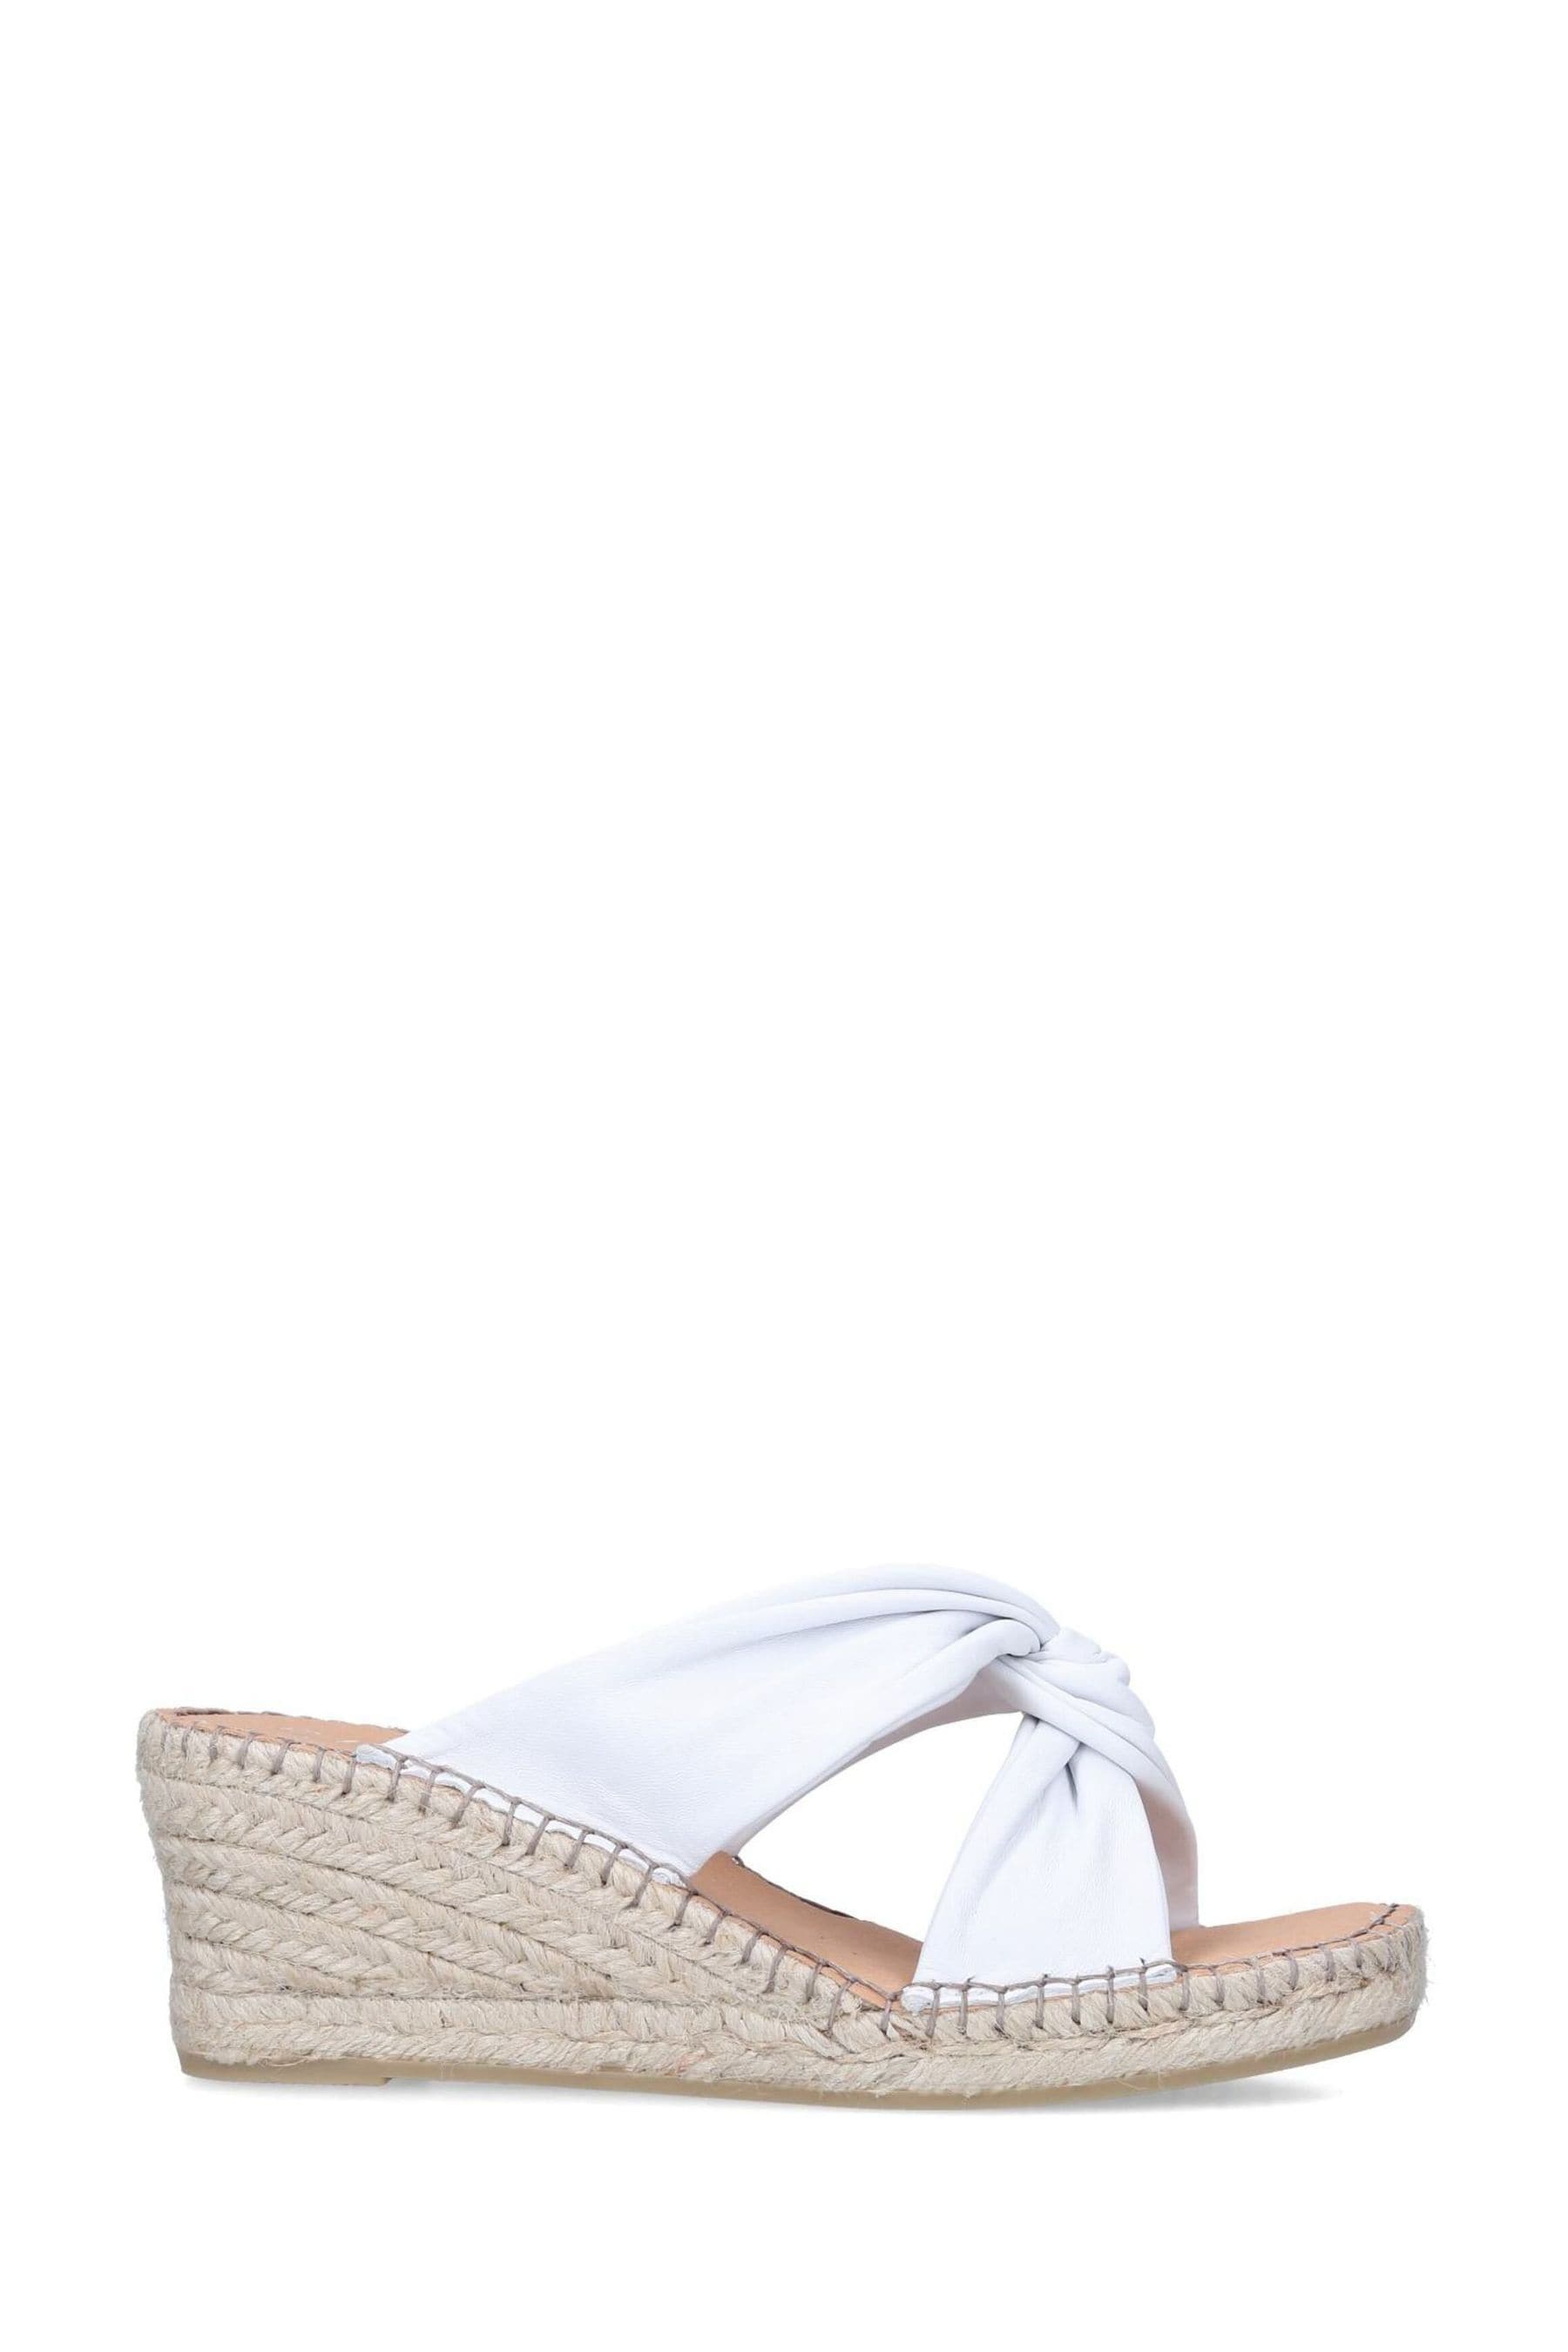 Buy Carvela Comfort White Twist Sandals from the Next UK online shop